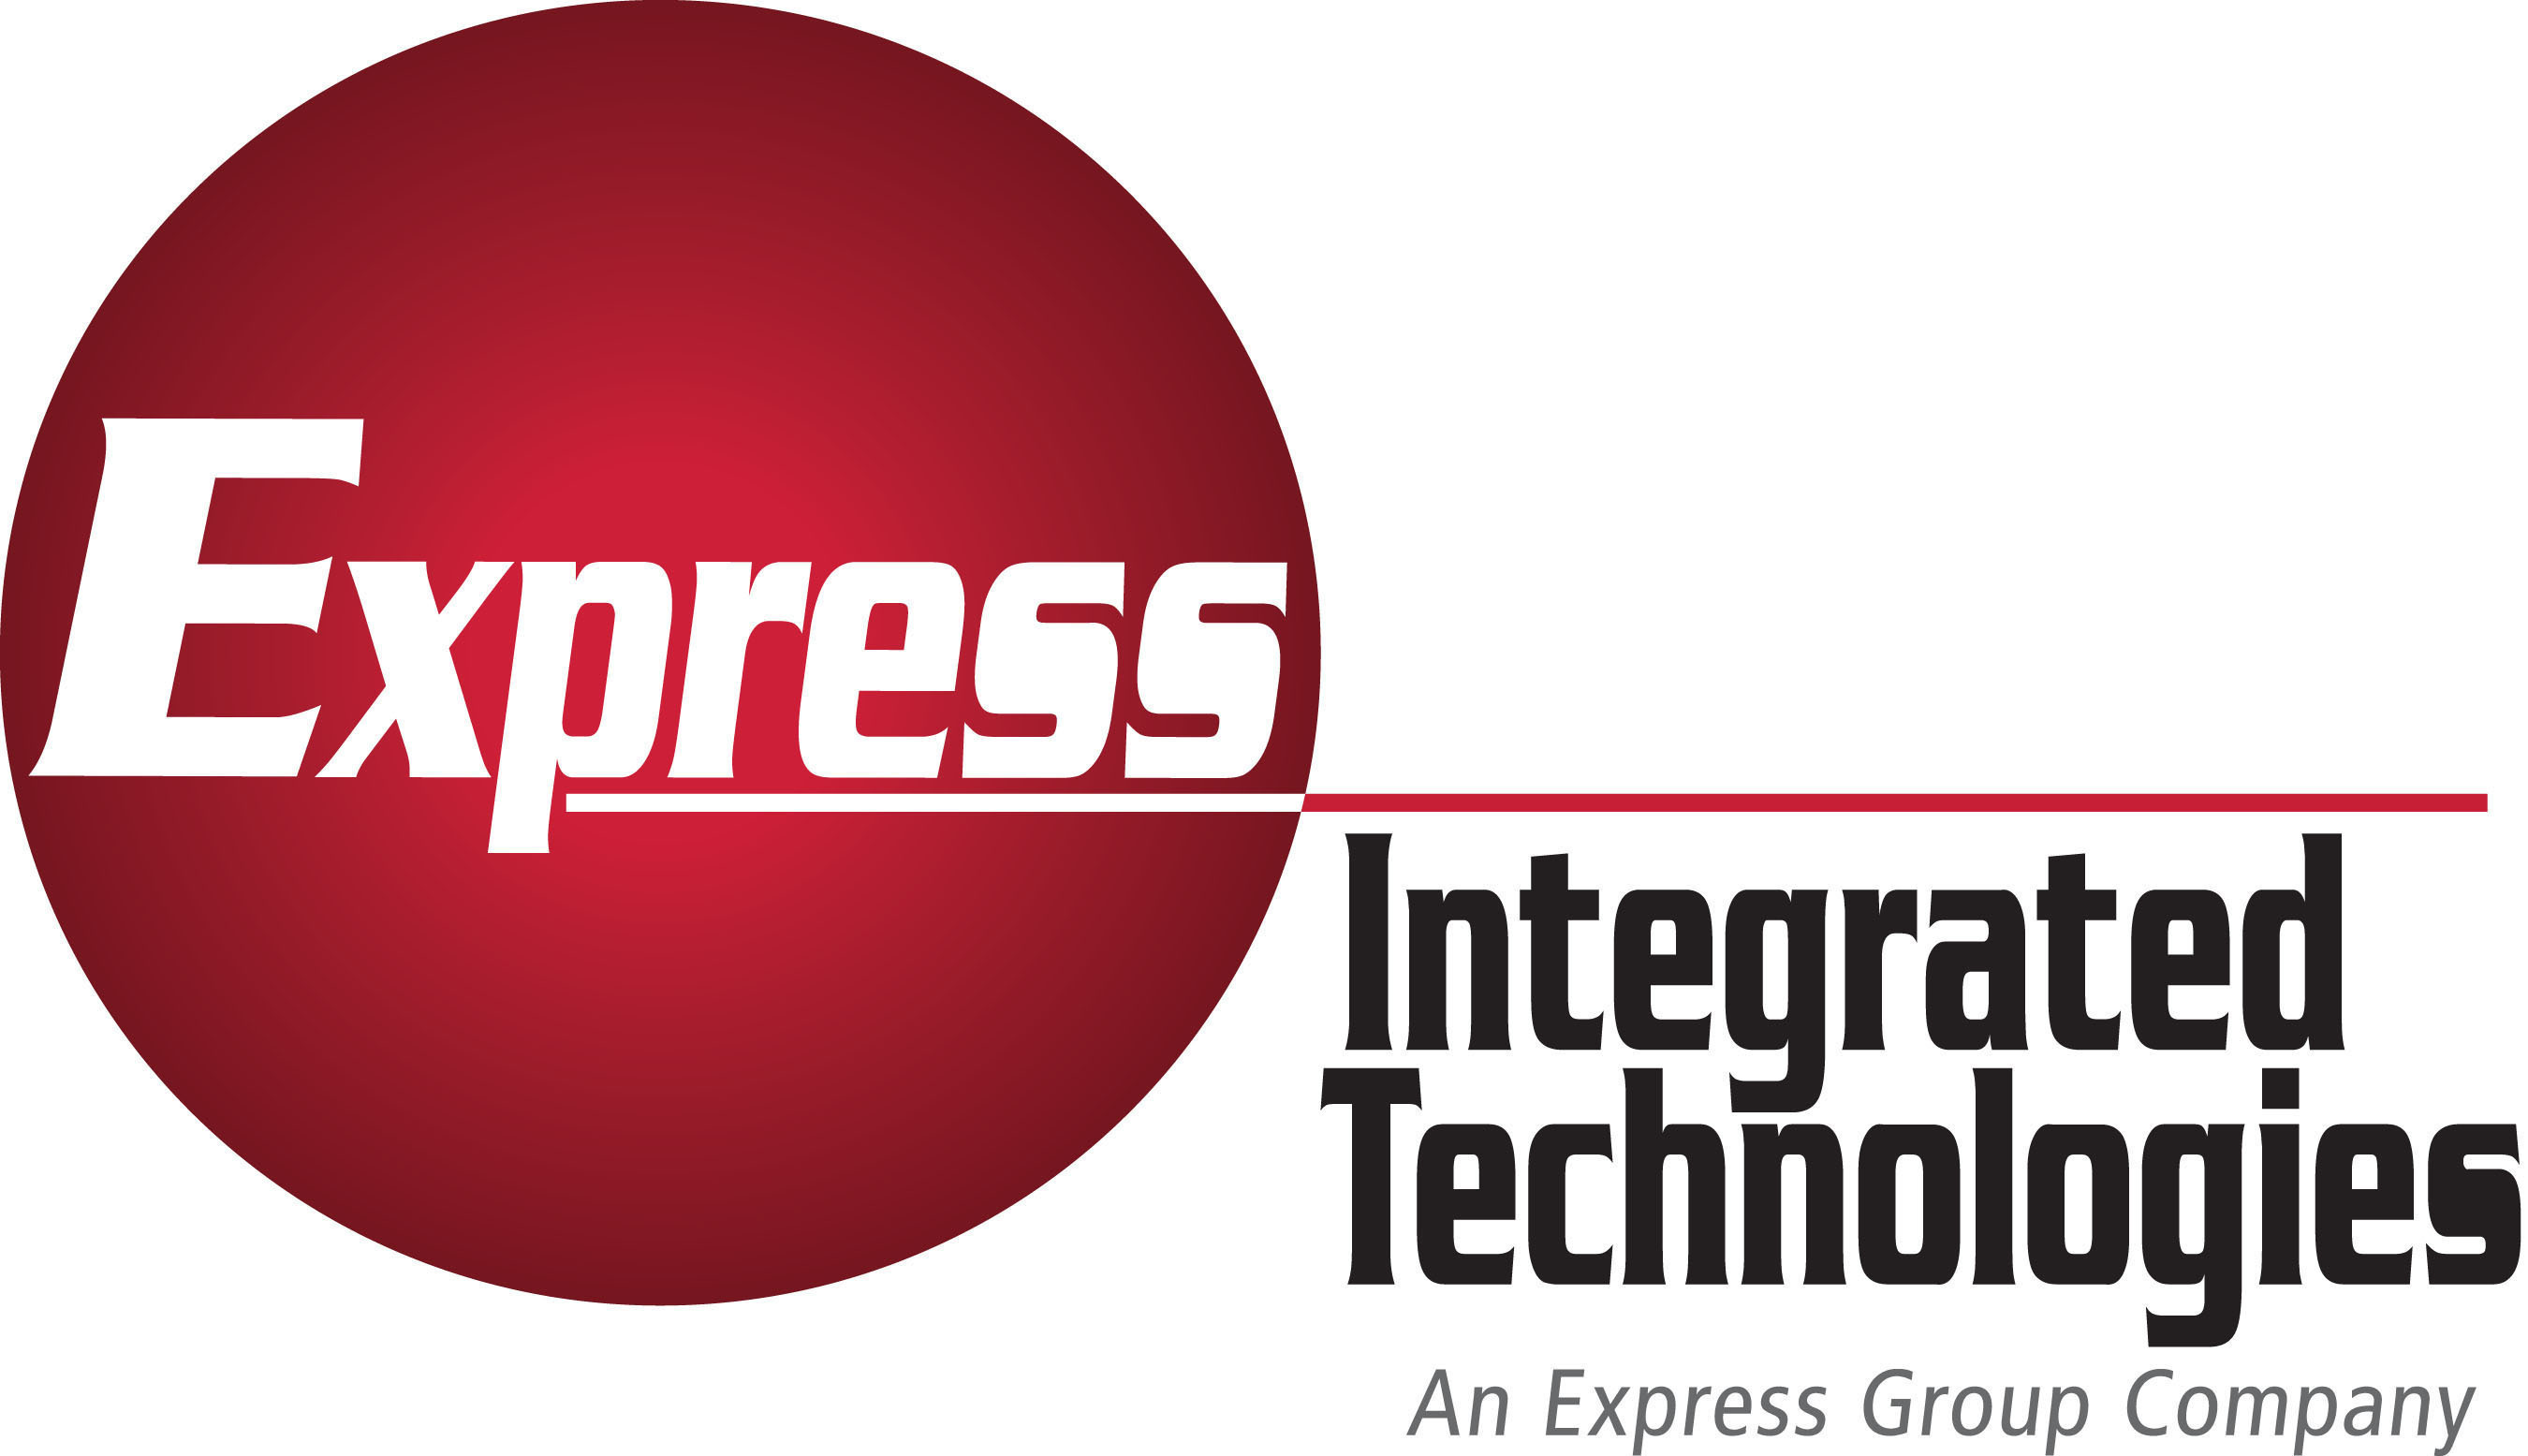 Express Integrated Technologies, a division of Express Group Holdings, LLC. (PRNewsFoto/Express Group Holdings, LLC) (PRNewsFoto/EXPRESS GROUP HOLDINGS, LLC)